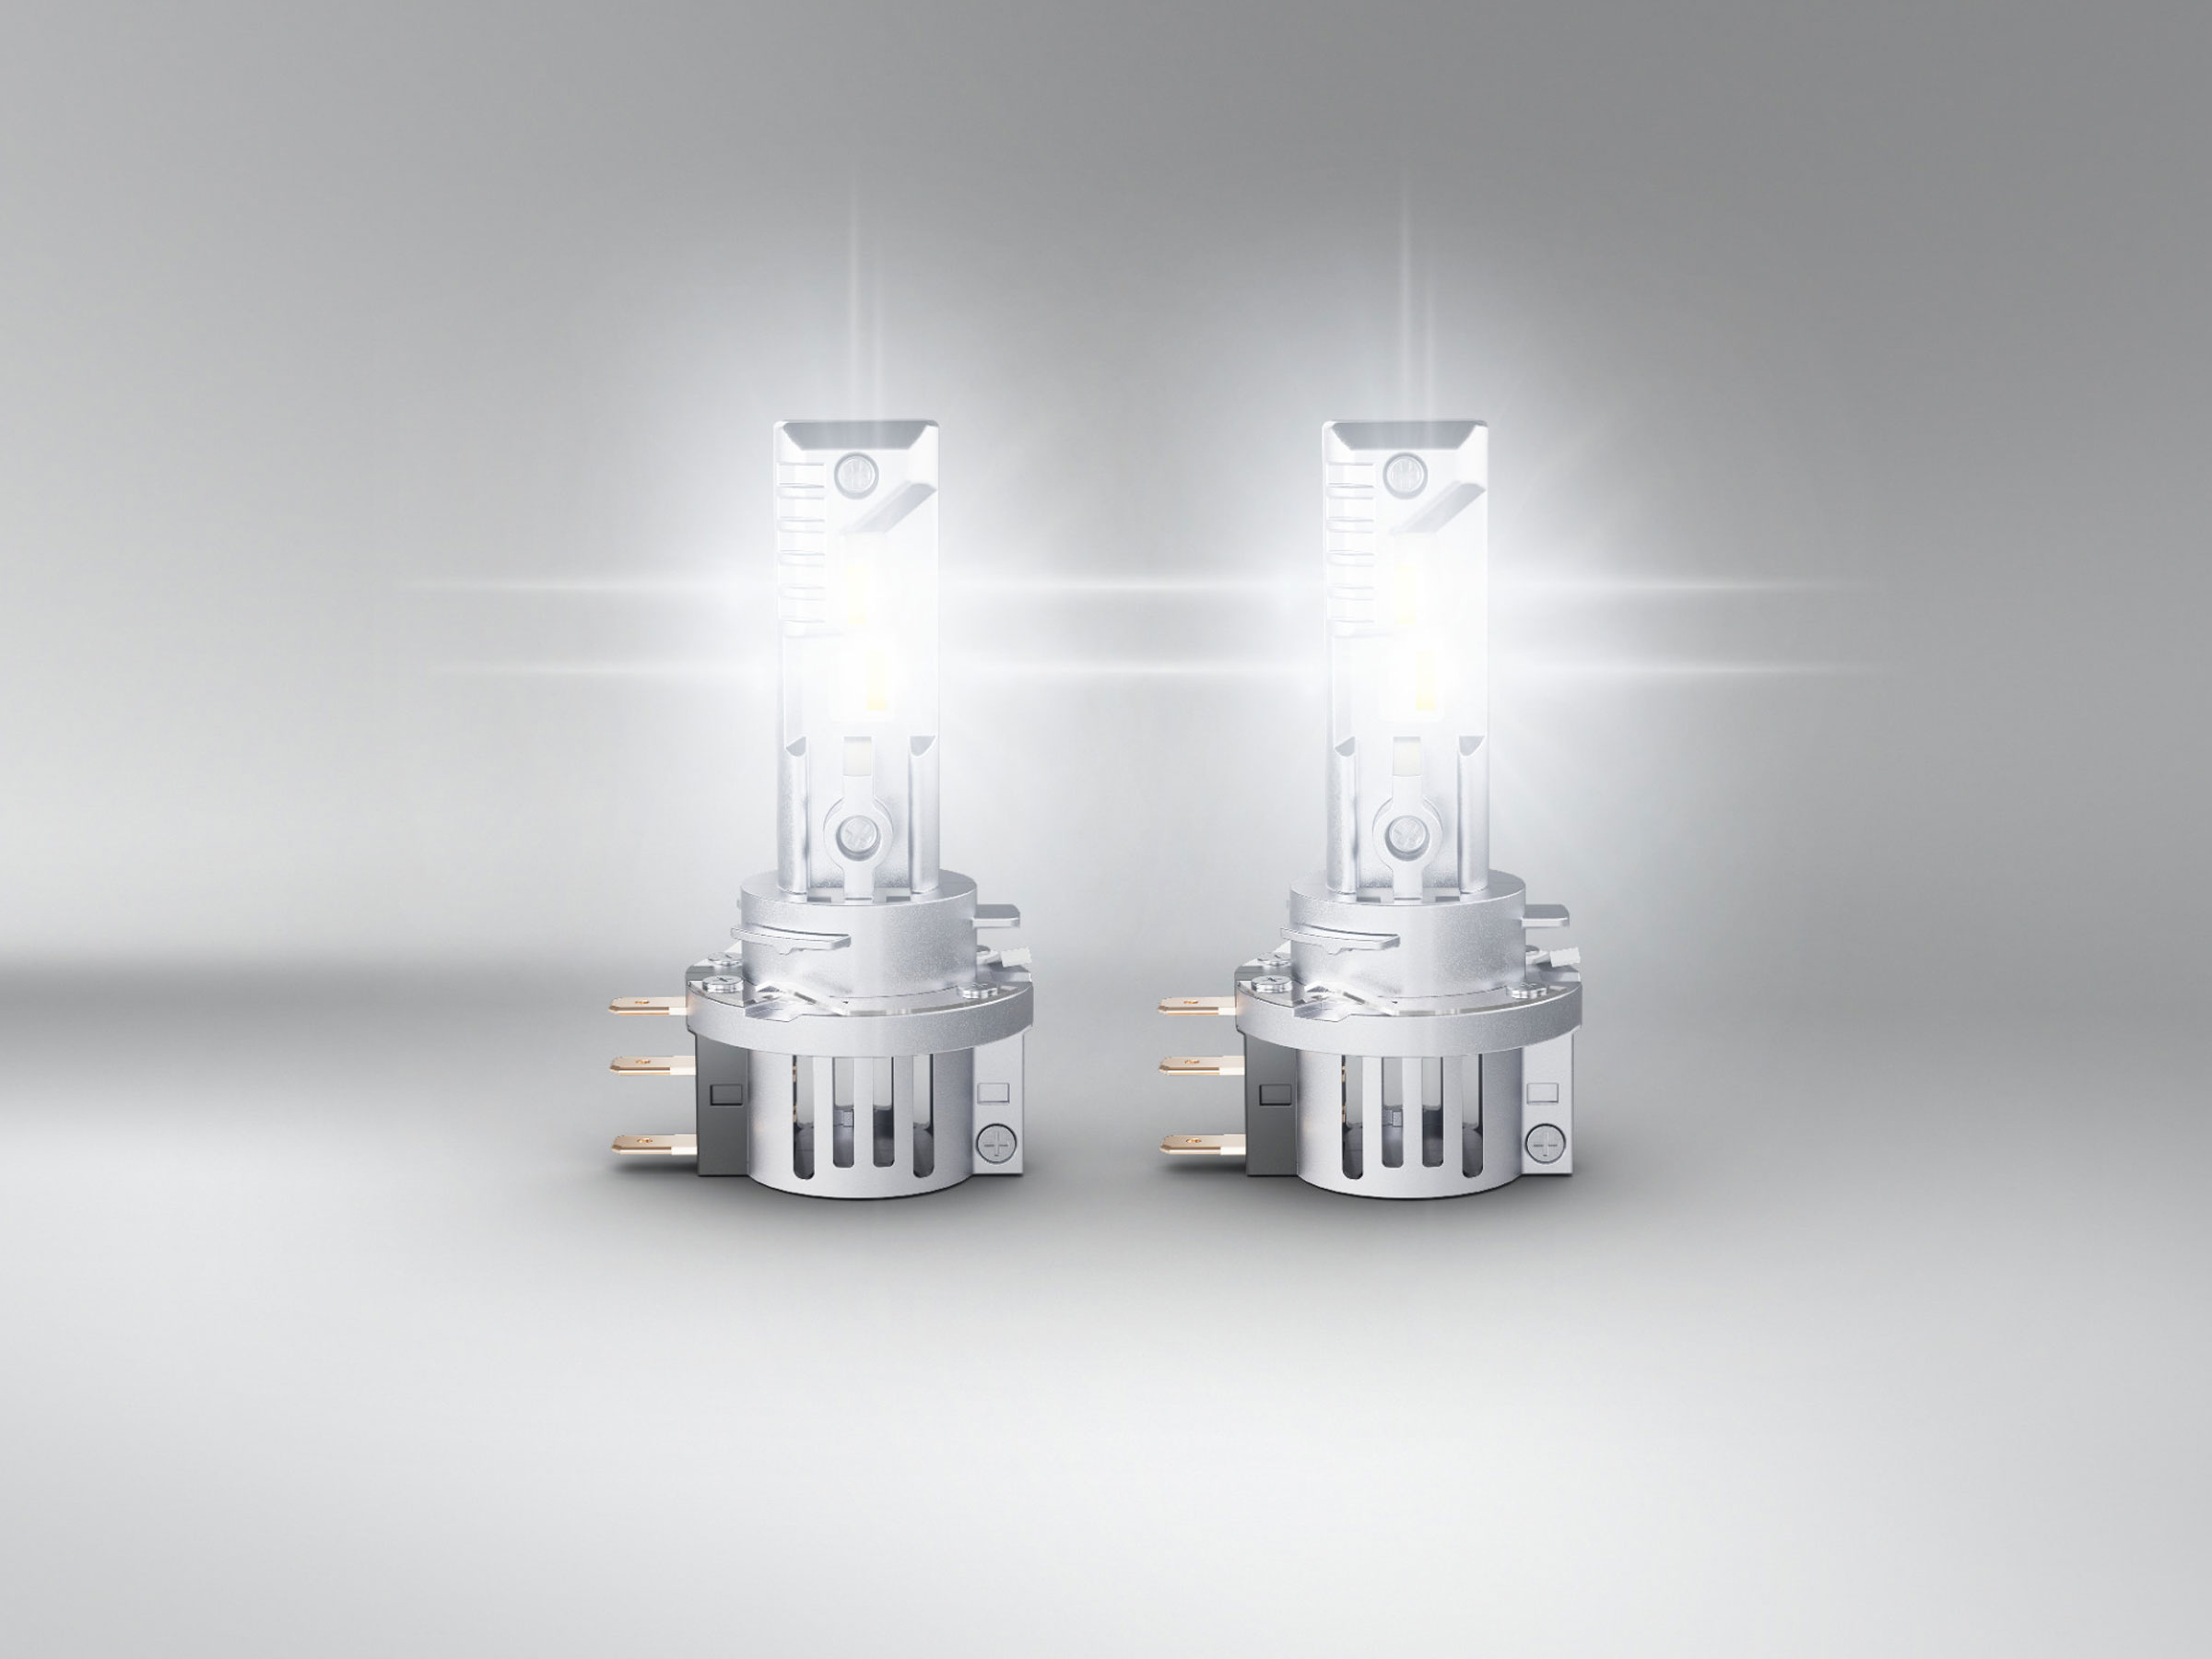 Birne LED R10W 12V - 1,2W BA15S Osram LEDriving weiß 6000K (X2) kaufen